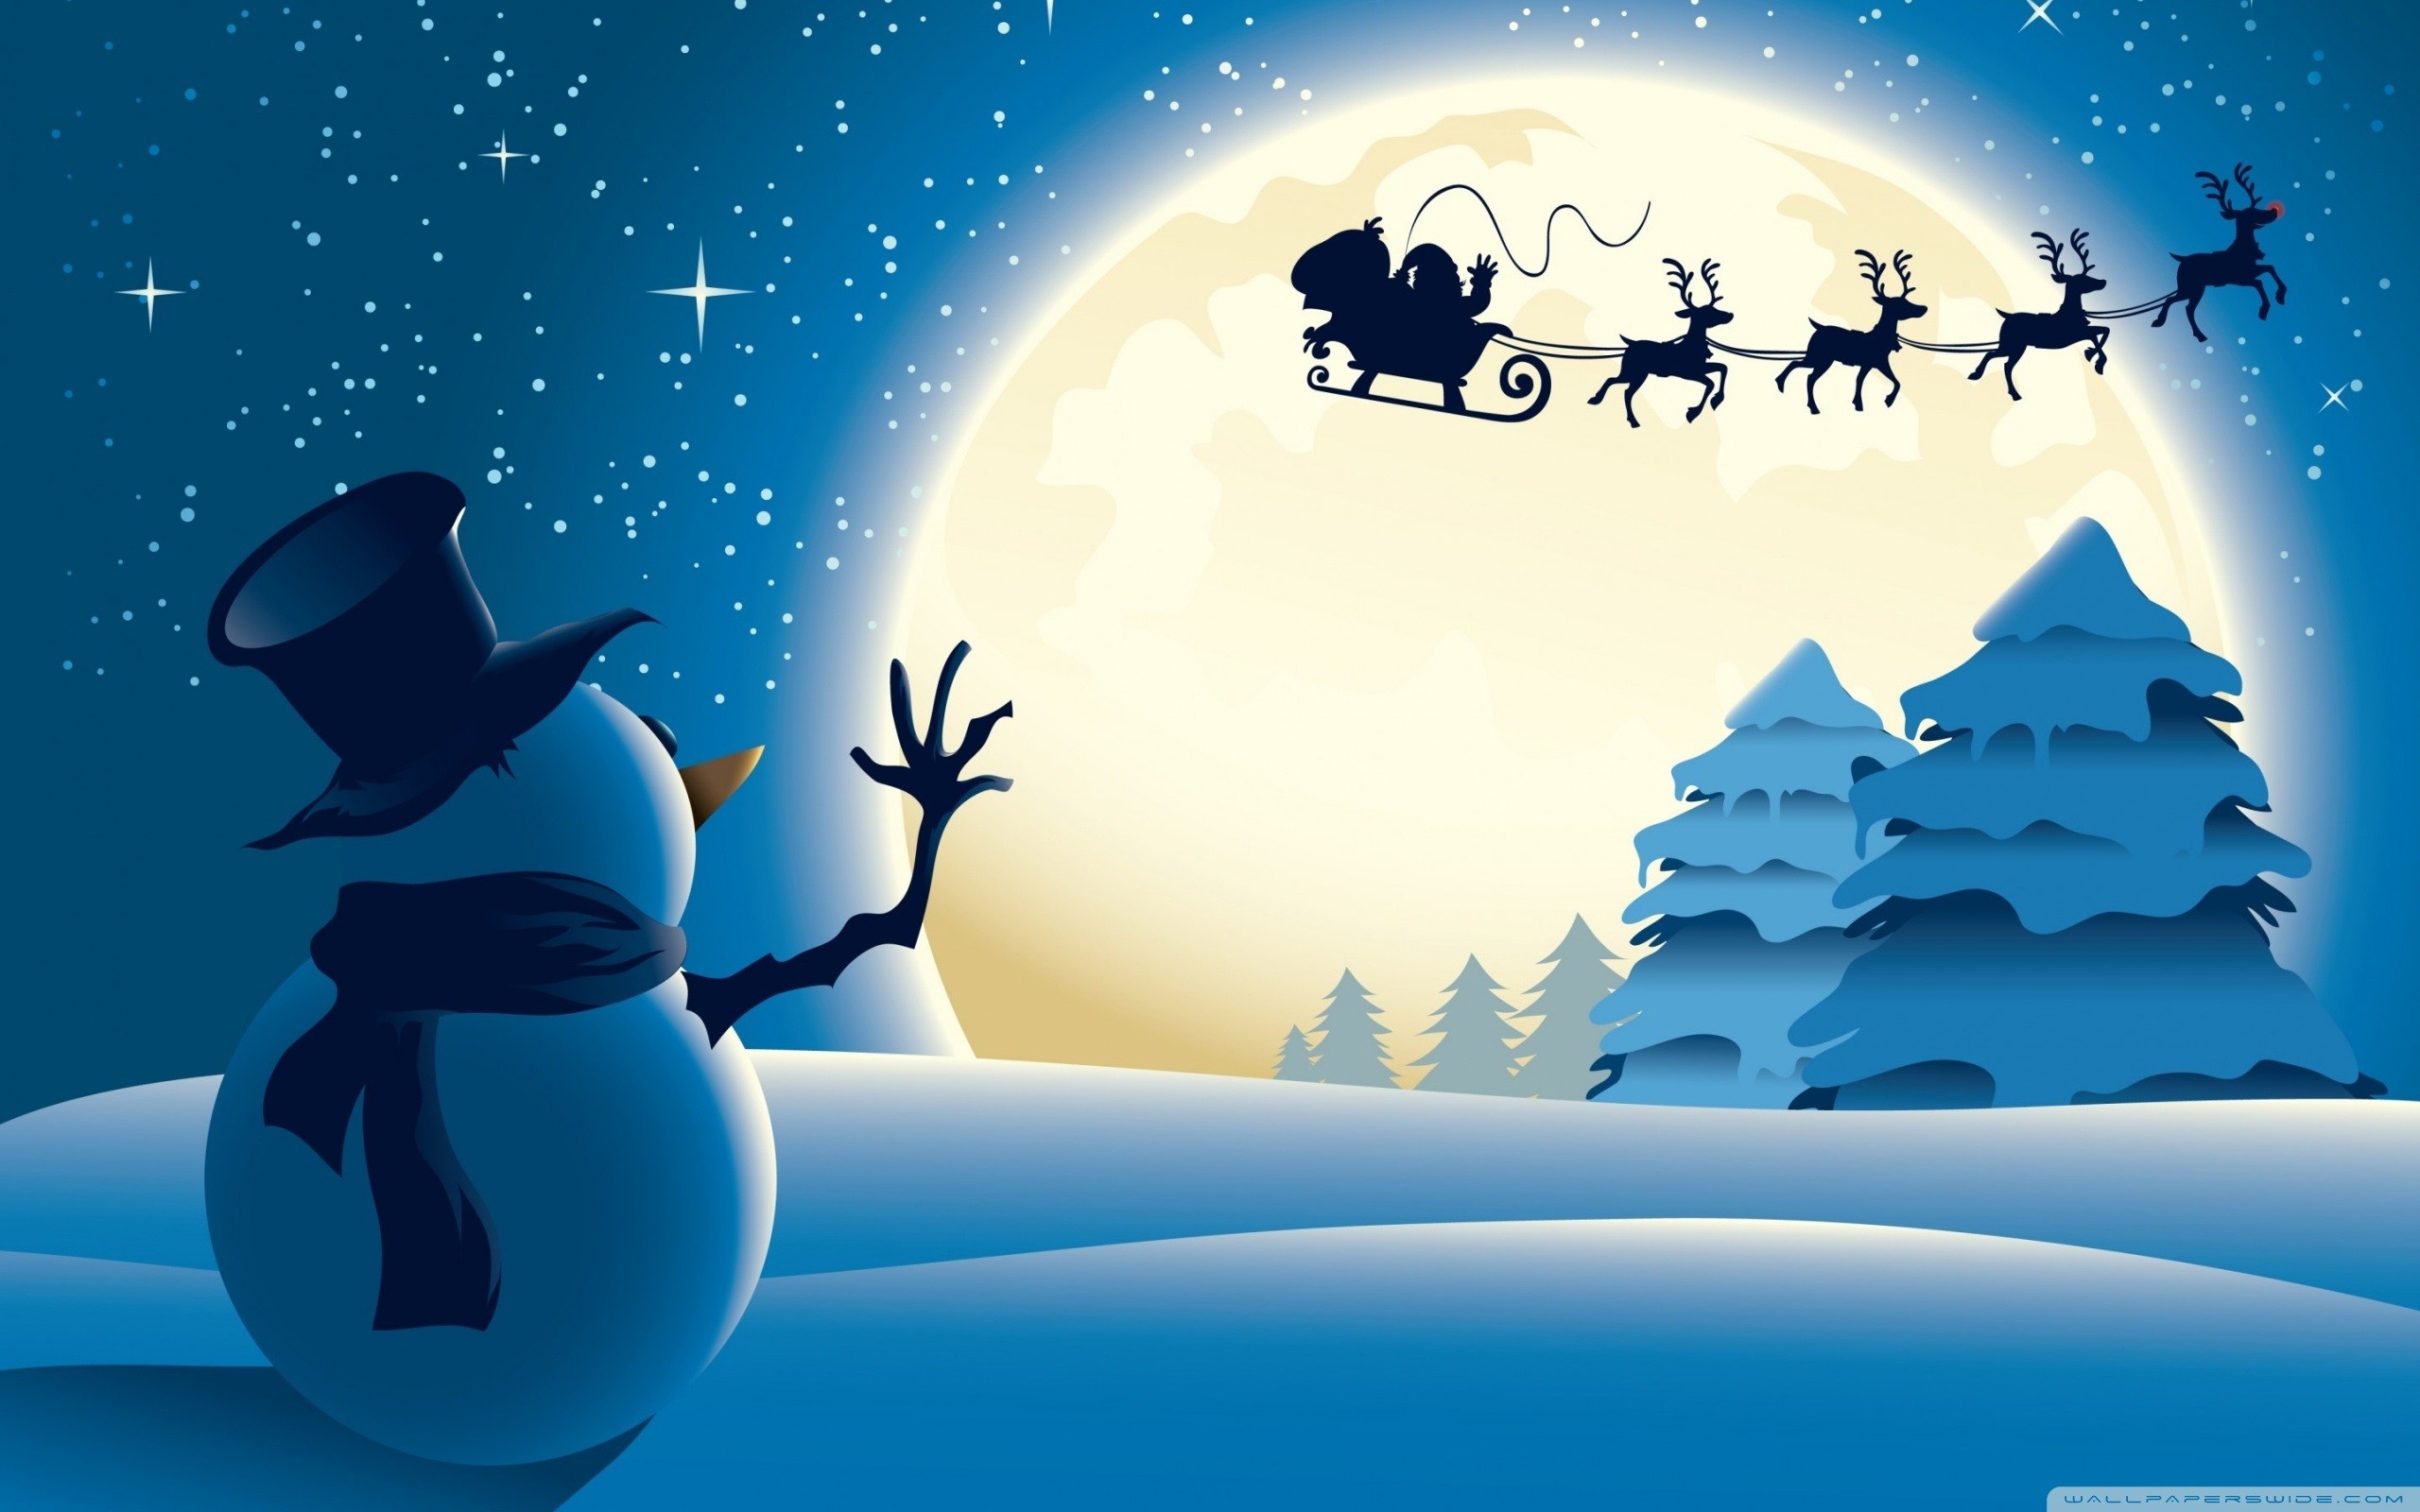 2560x1600 santa claus and snowman wallpaper - Download Hd santa claus and snowman  wallpaper for desktop and mobile device. Best wide santa claus and snowman  free ...